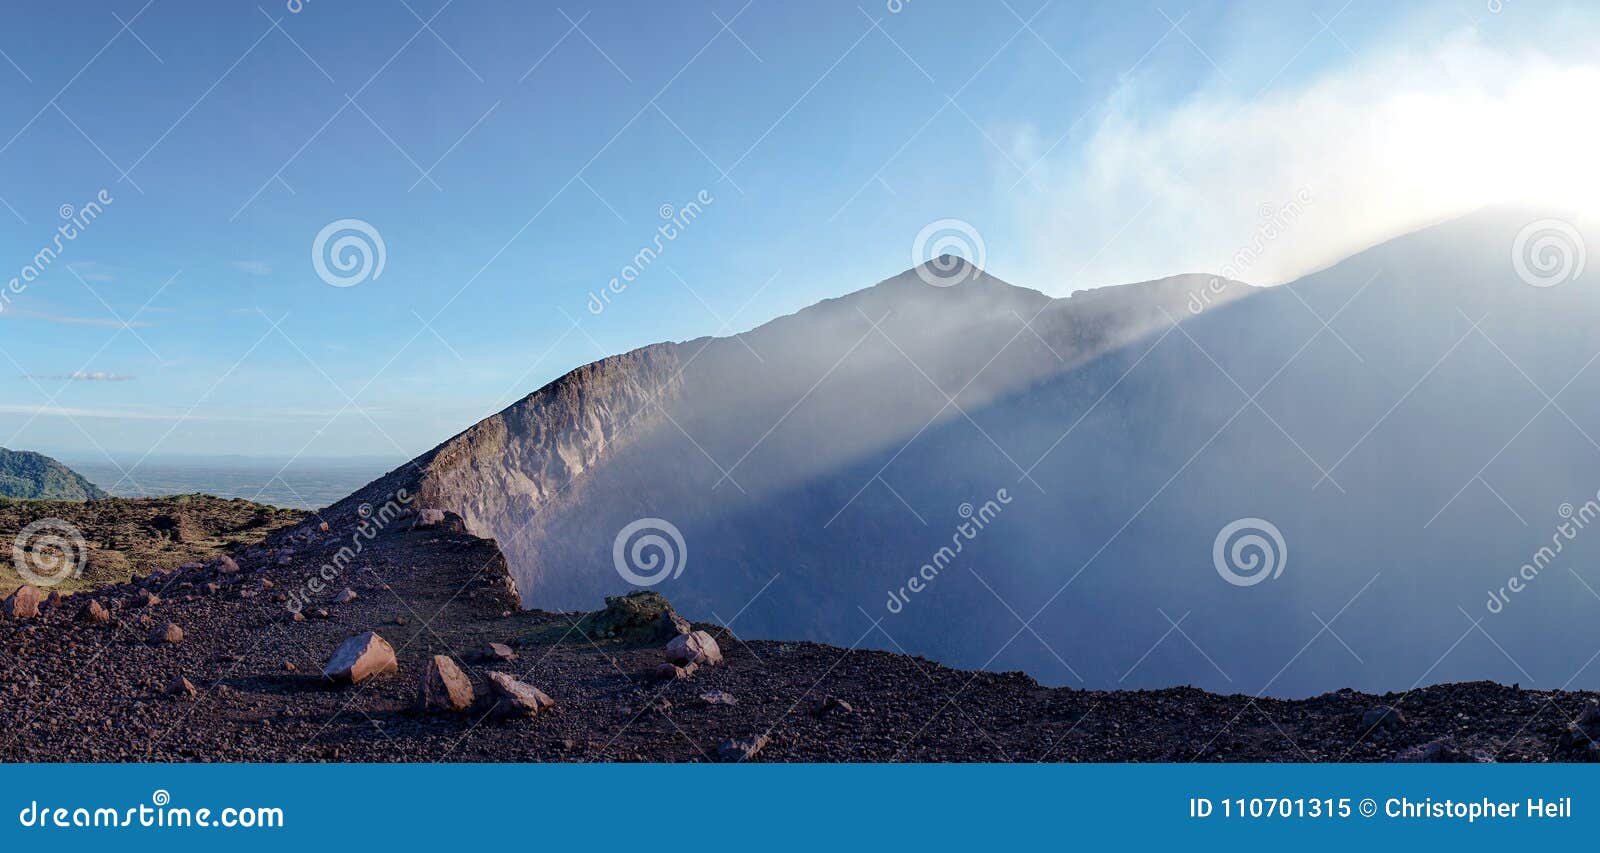 telica stratovolcano panorama in nicaragua.